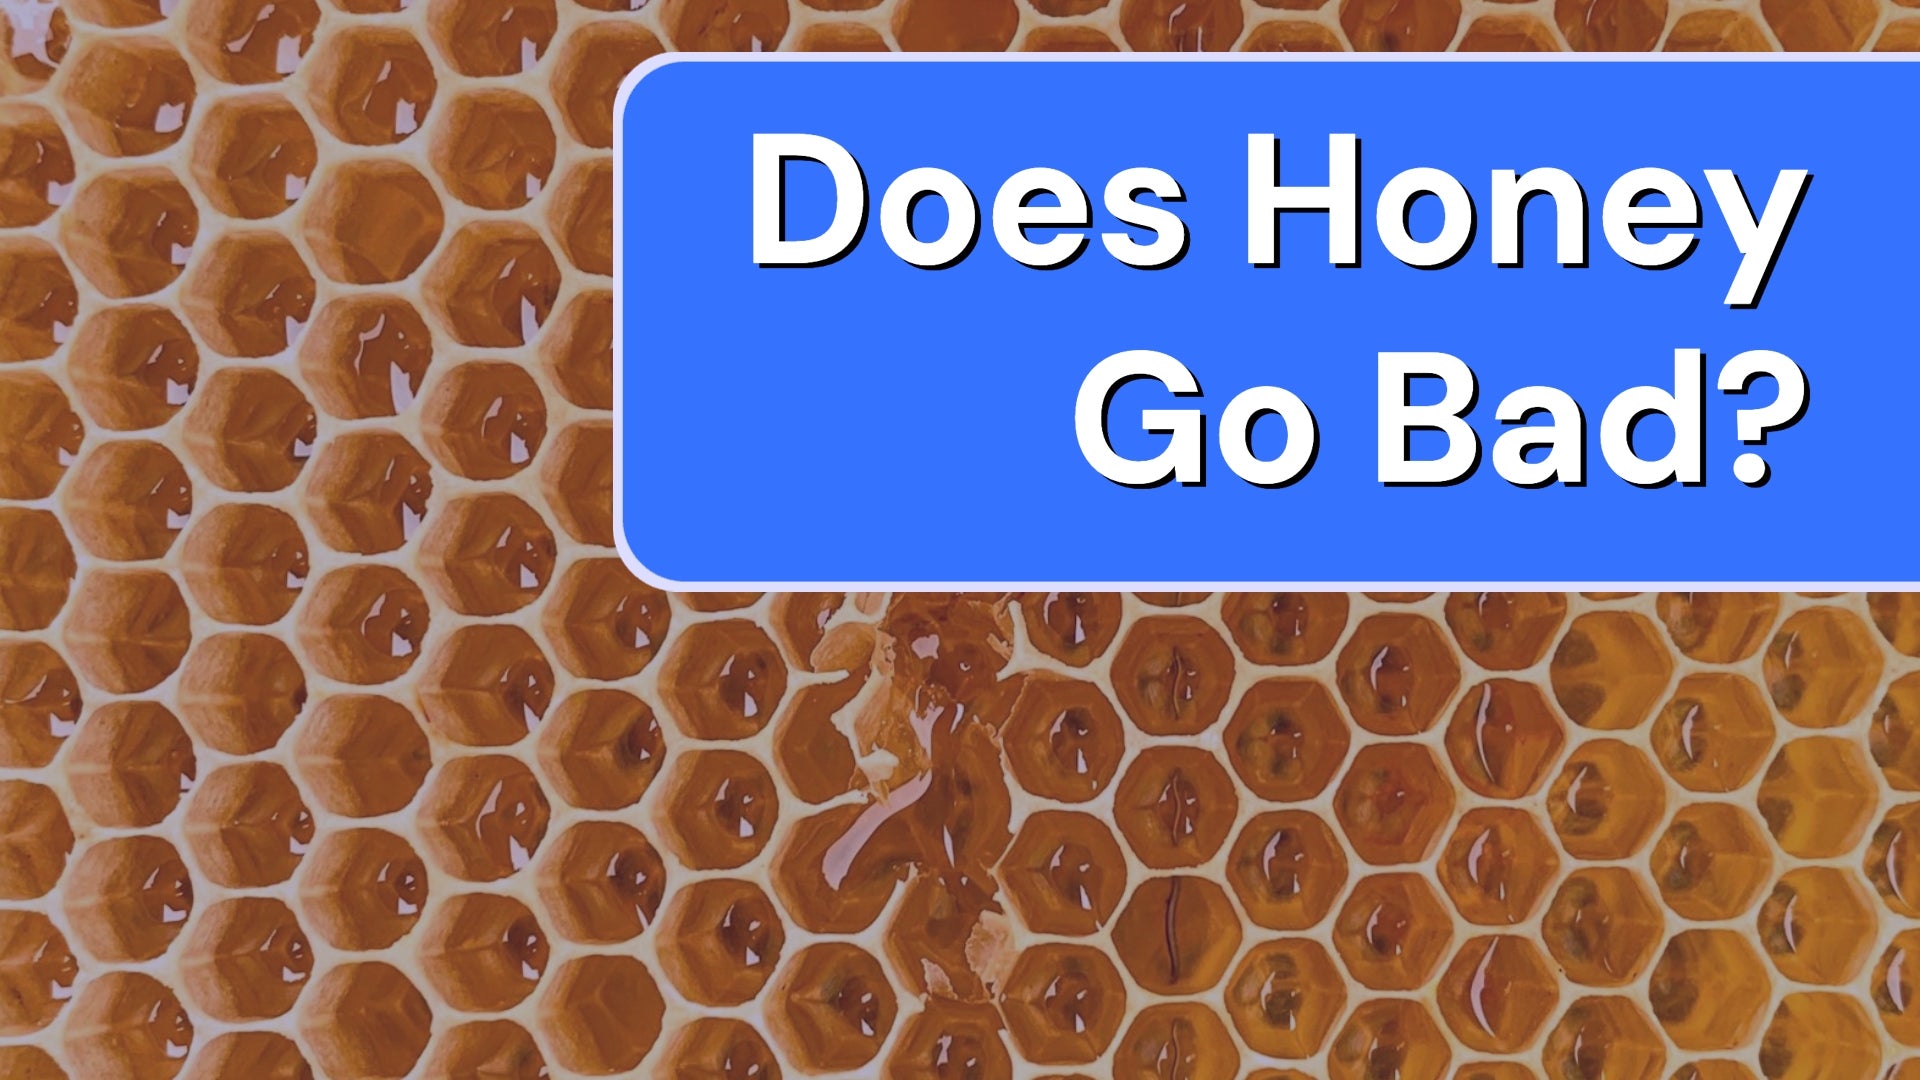 Does Honey Go Bad?